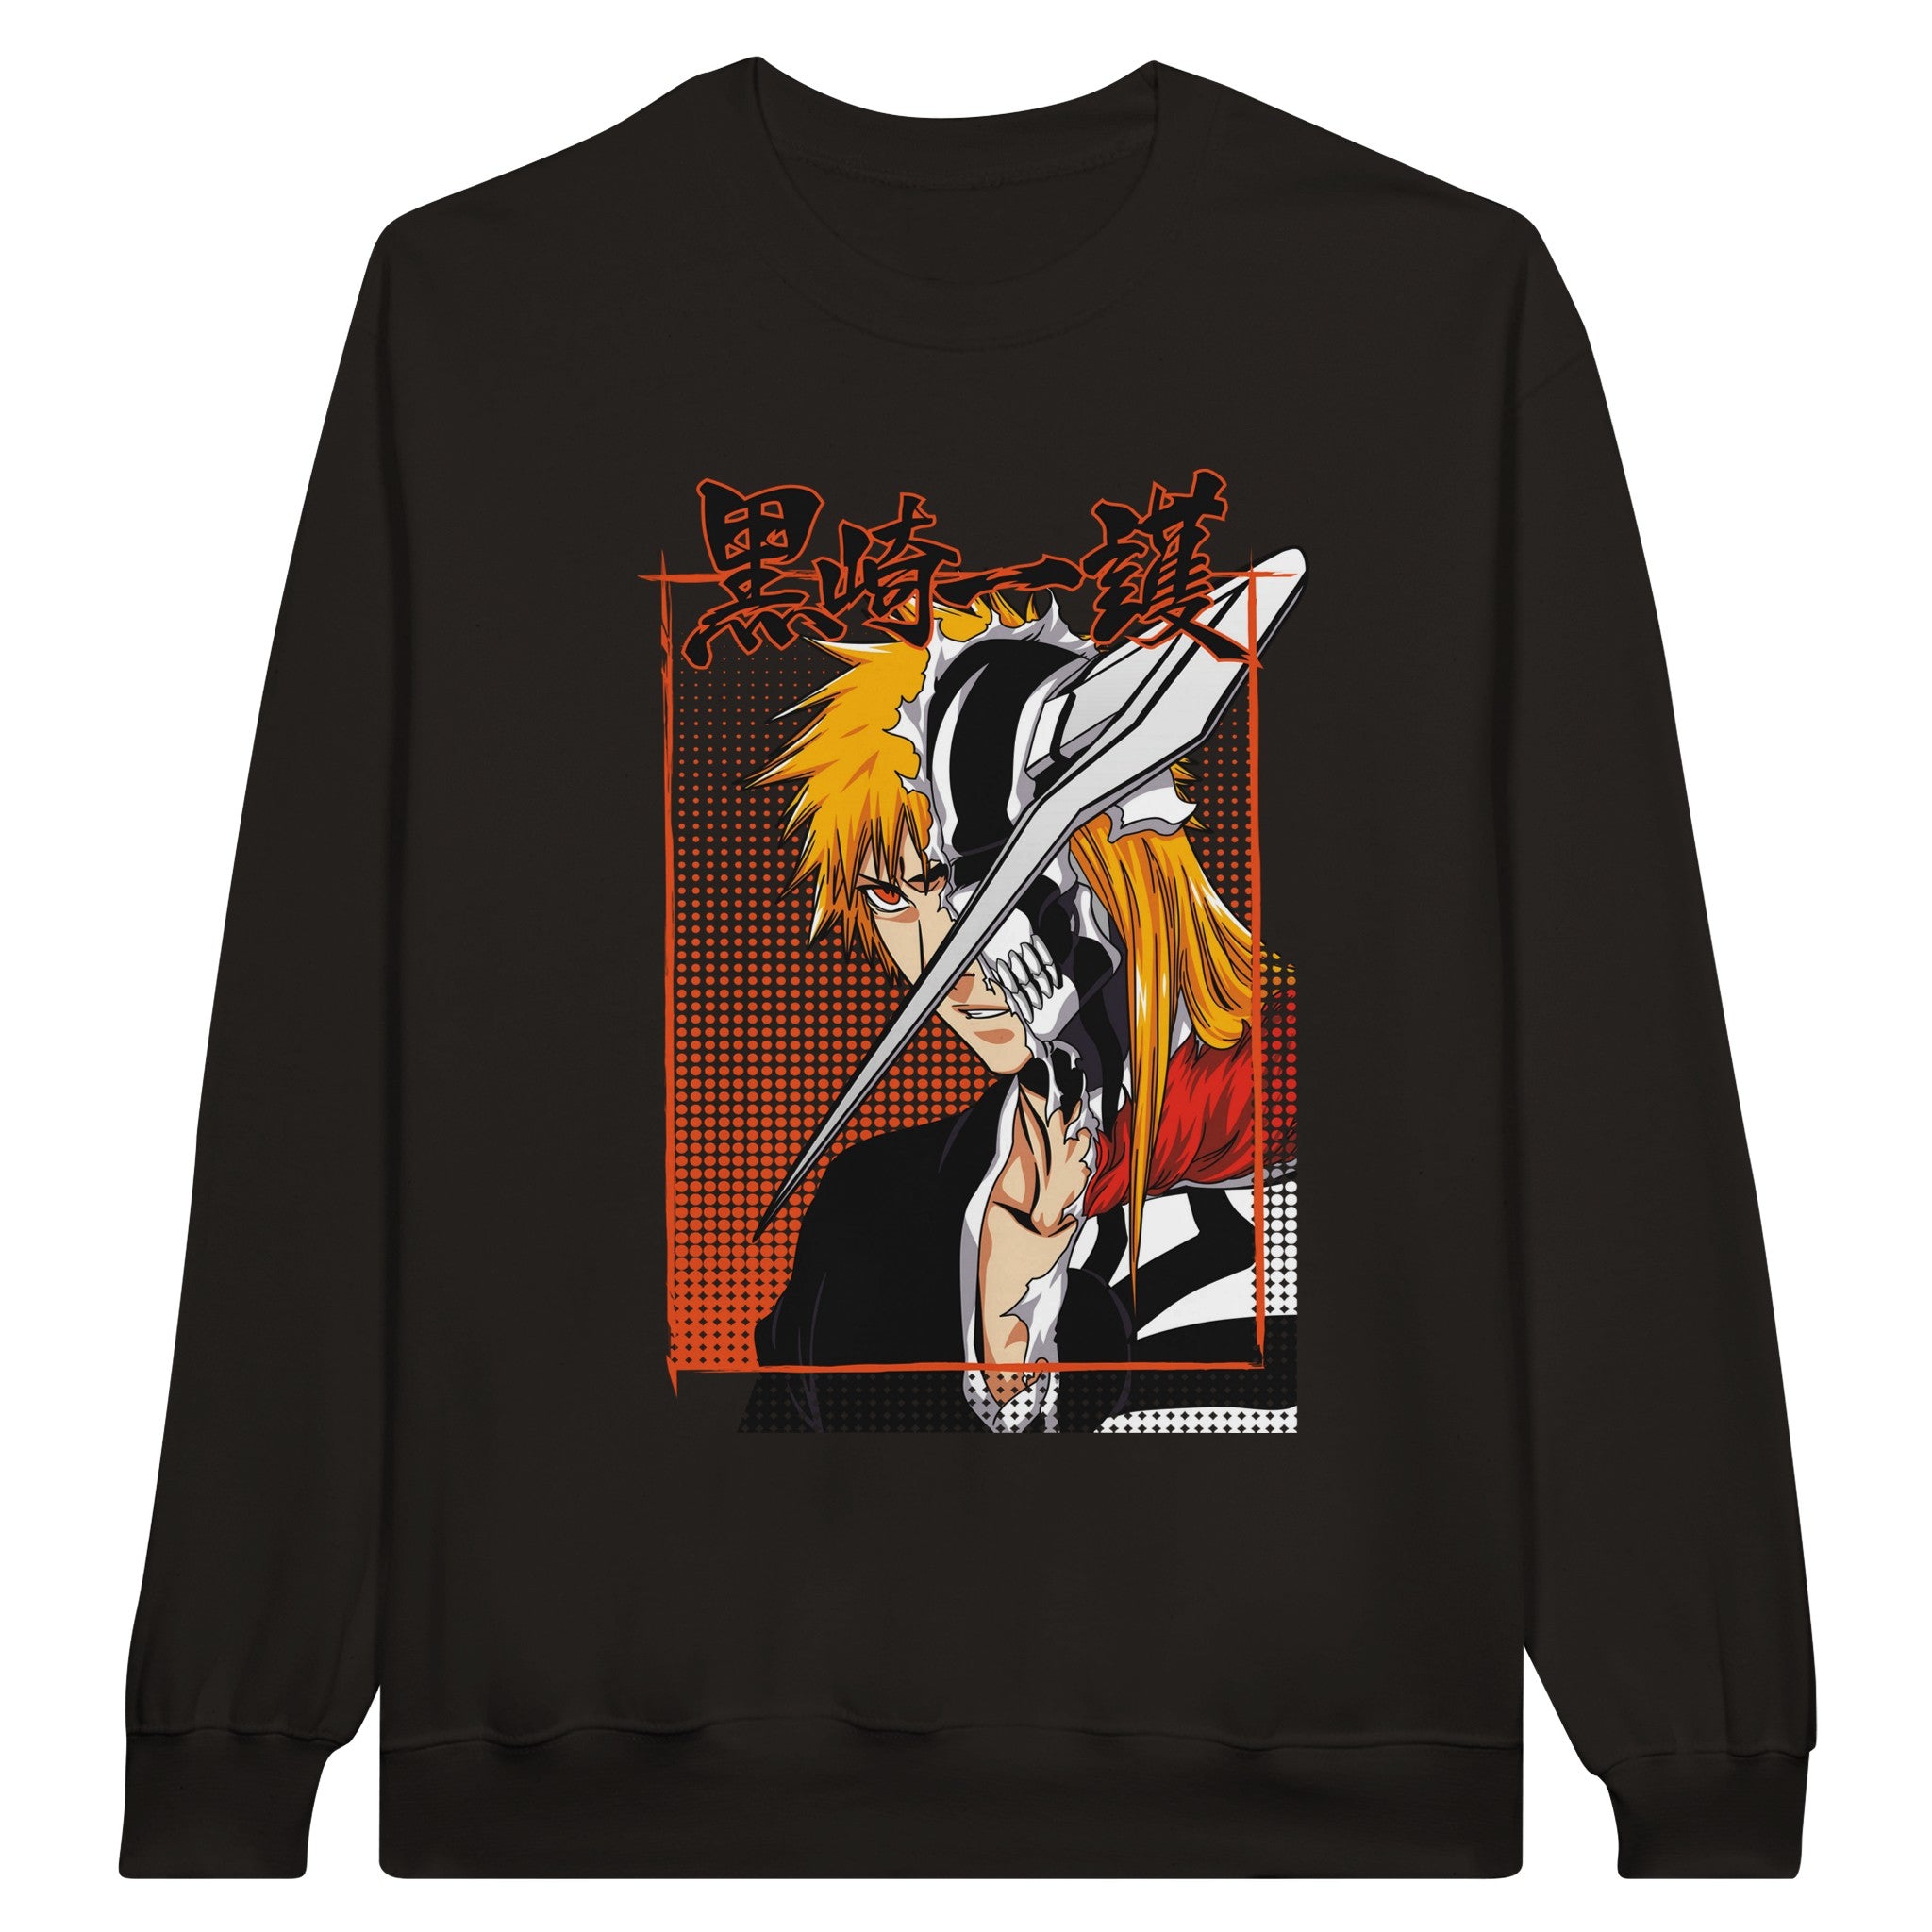 shop and buy bleach anime clothing ichigo sweatshirt/jumper/longsleeve